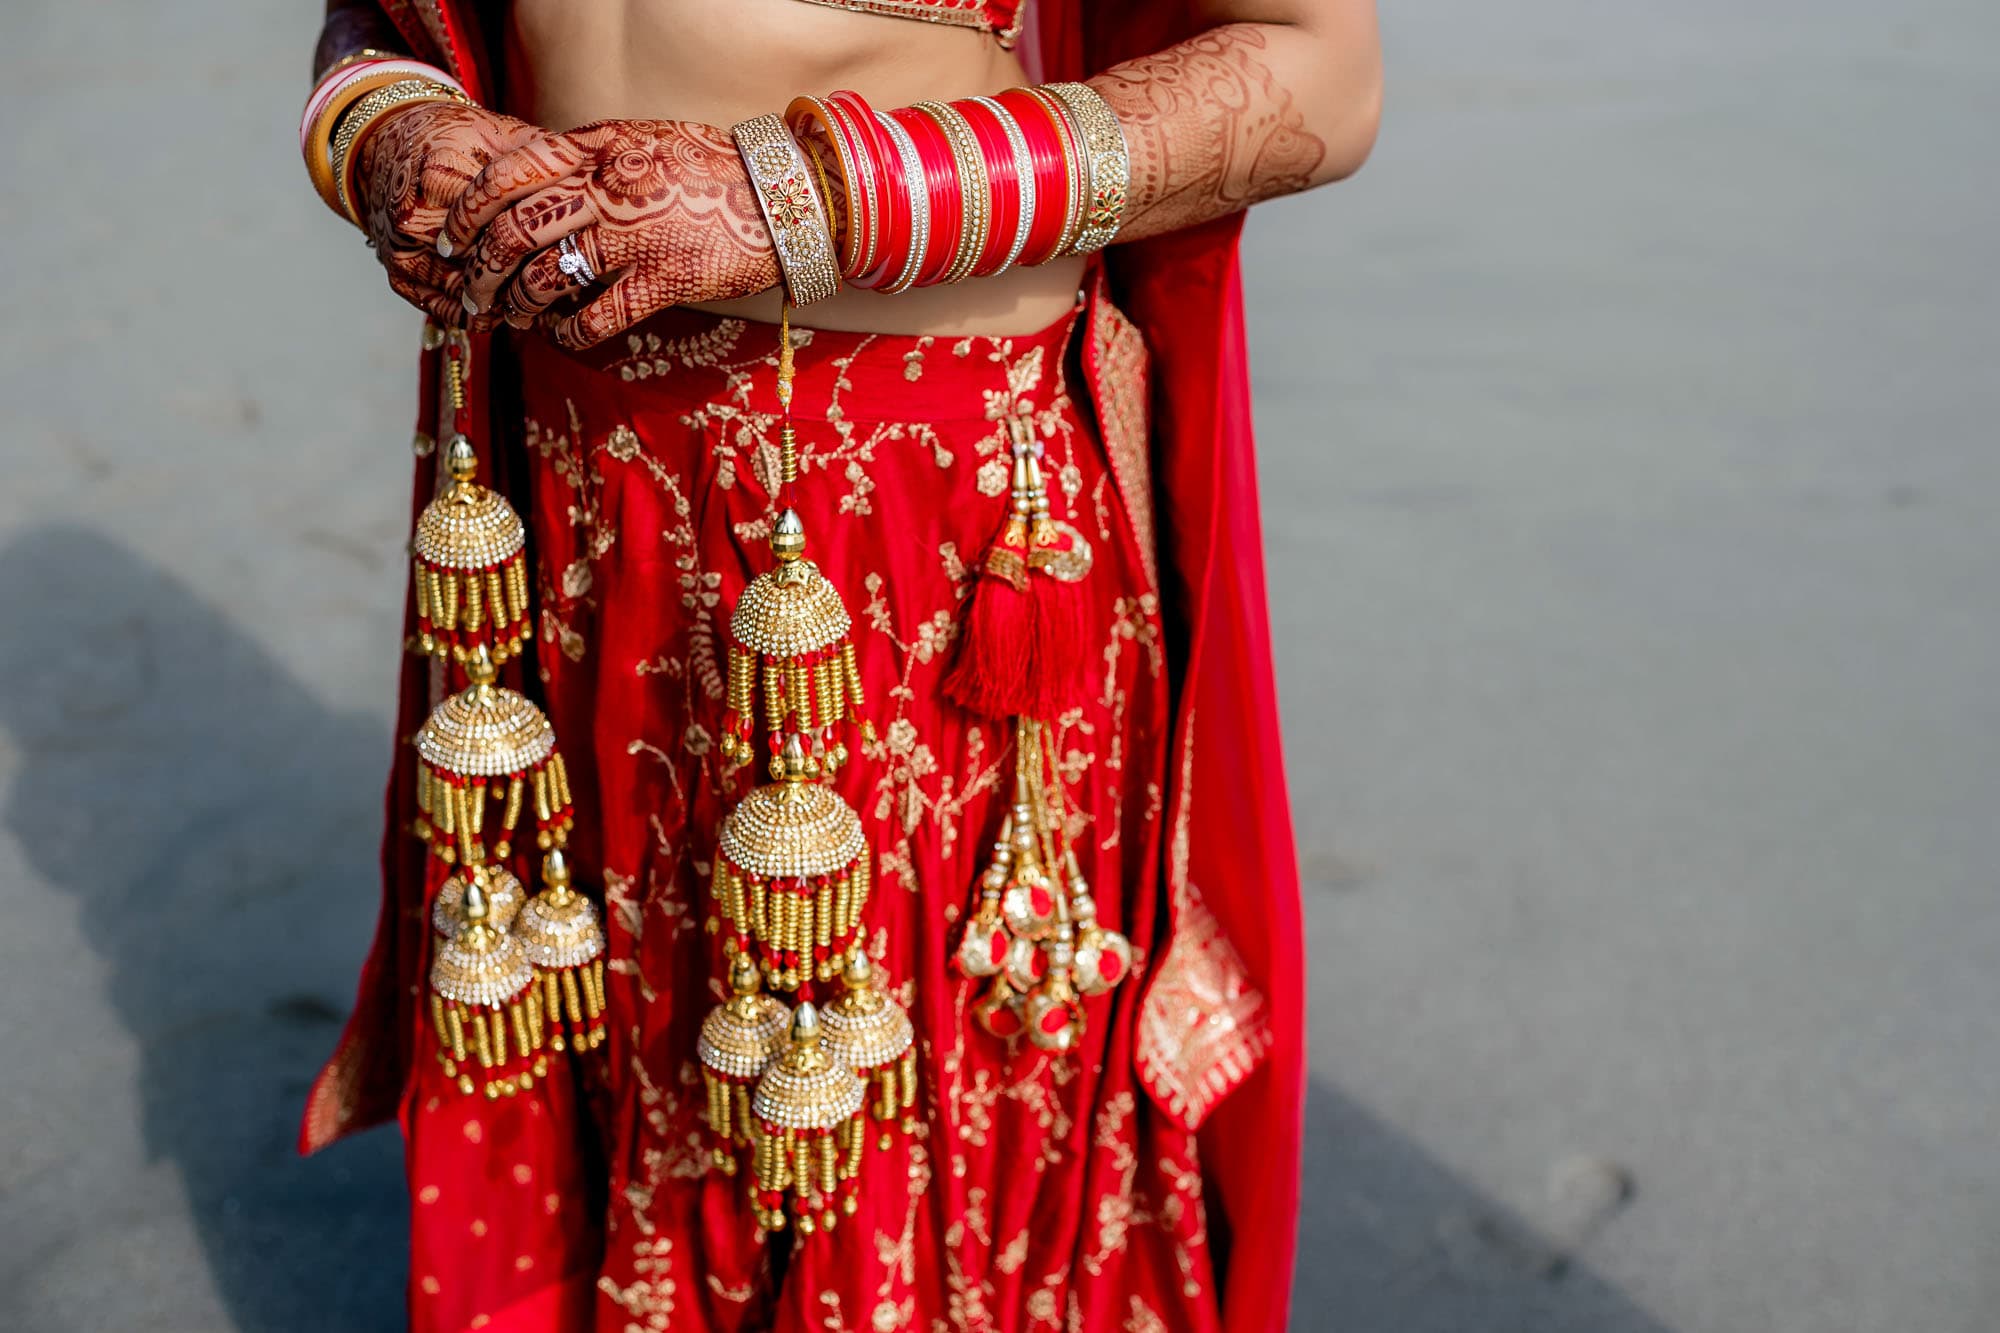 Closeup of the bride's wedding sari